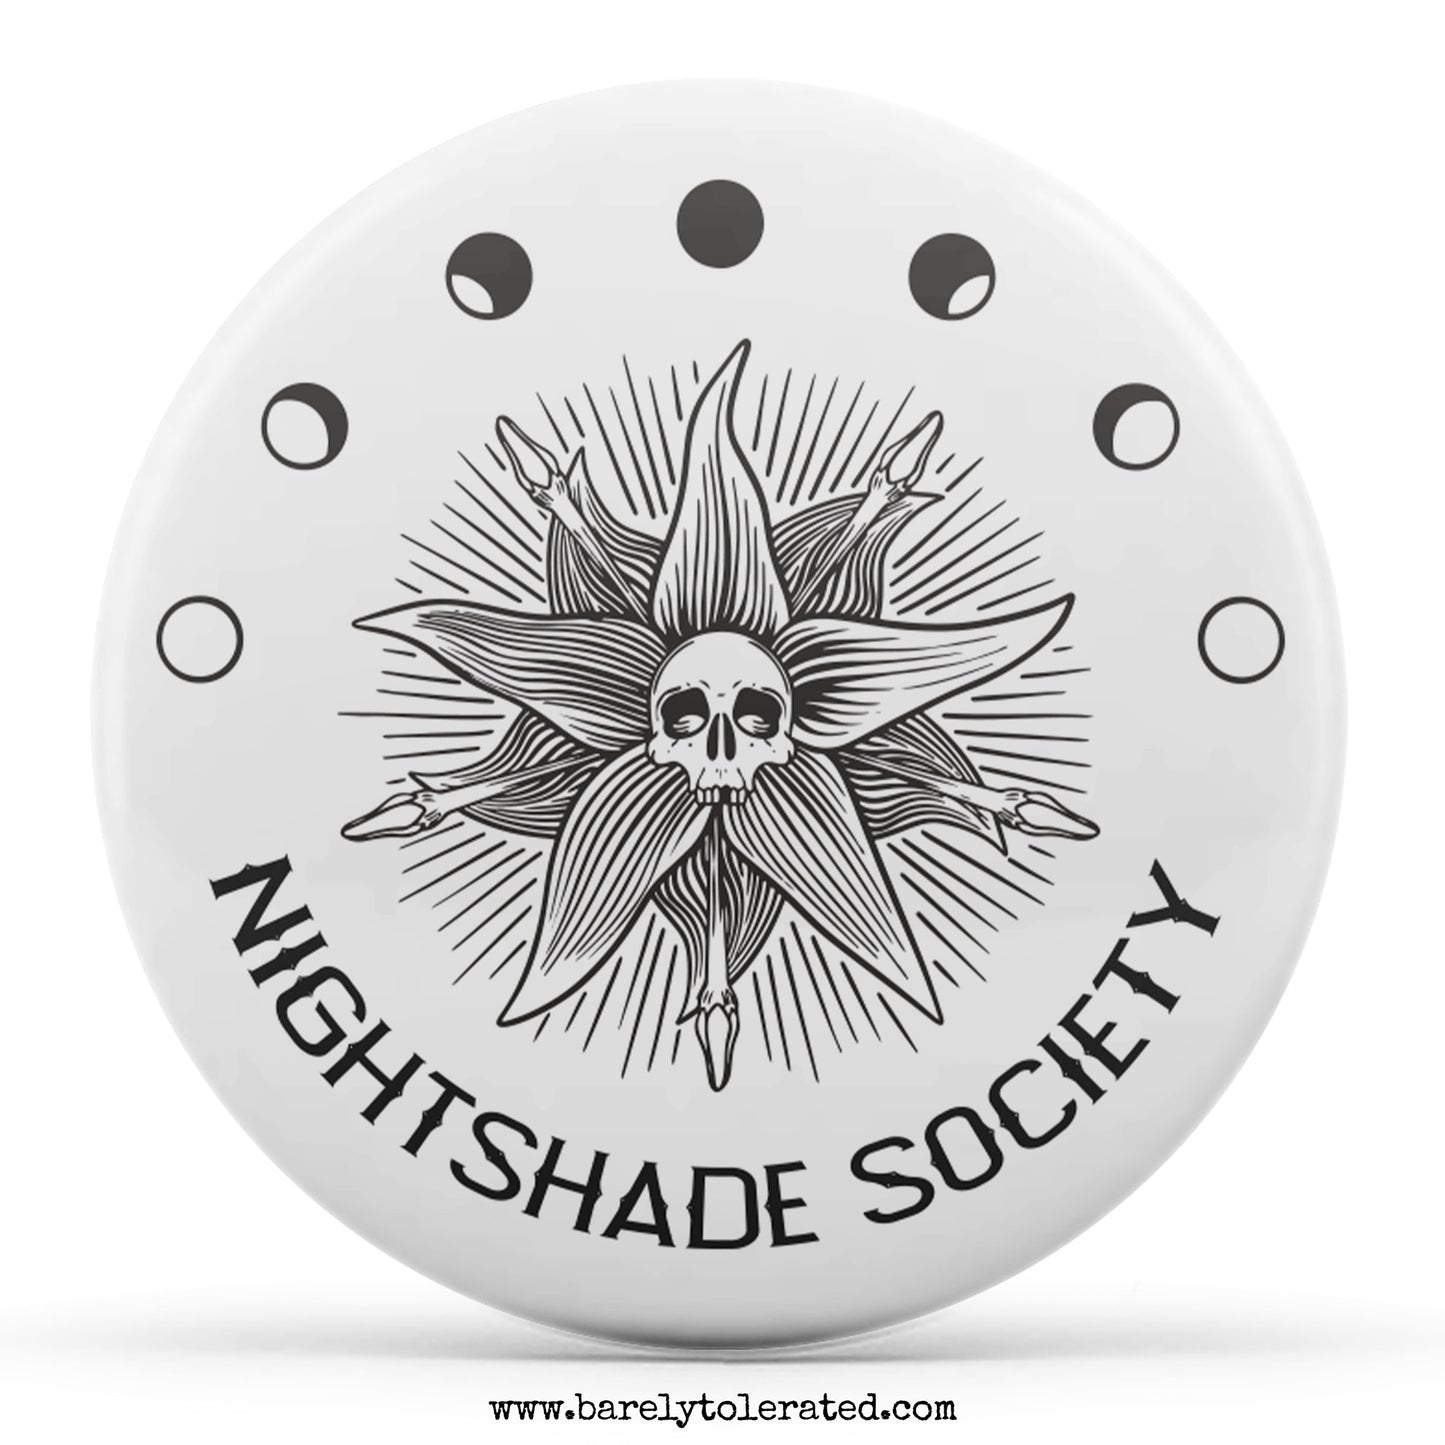 Nightshade Society